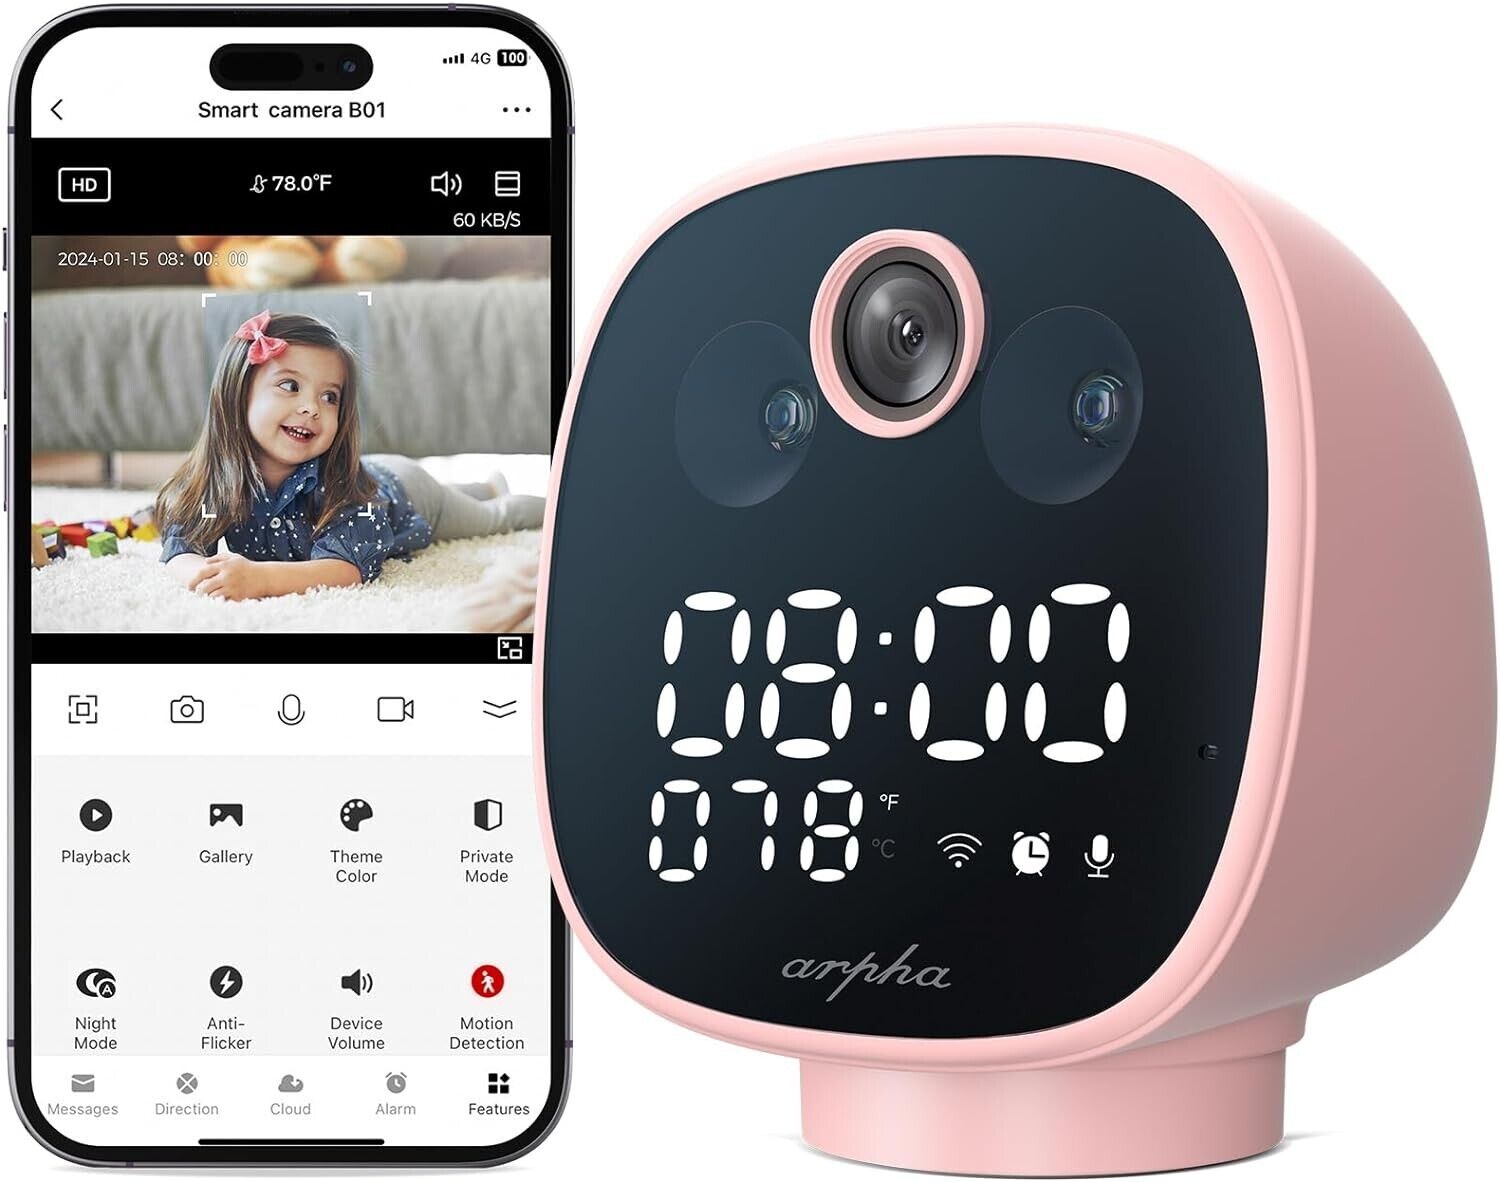 NEW Pink 1080p Security Camera: Night Vision, Pan-Tilt, Baby Monitor ($44.95)